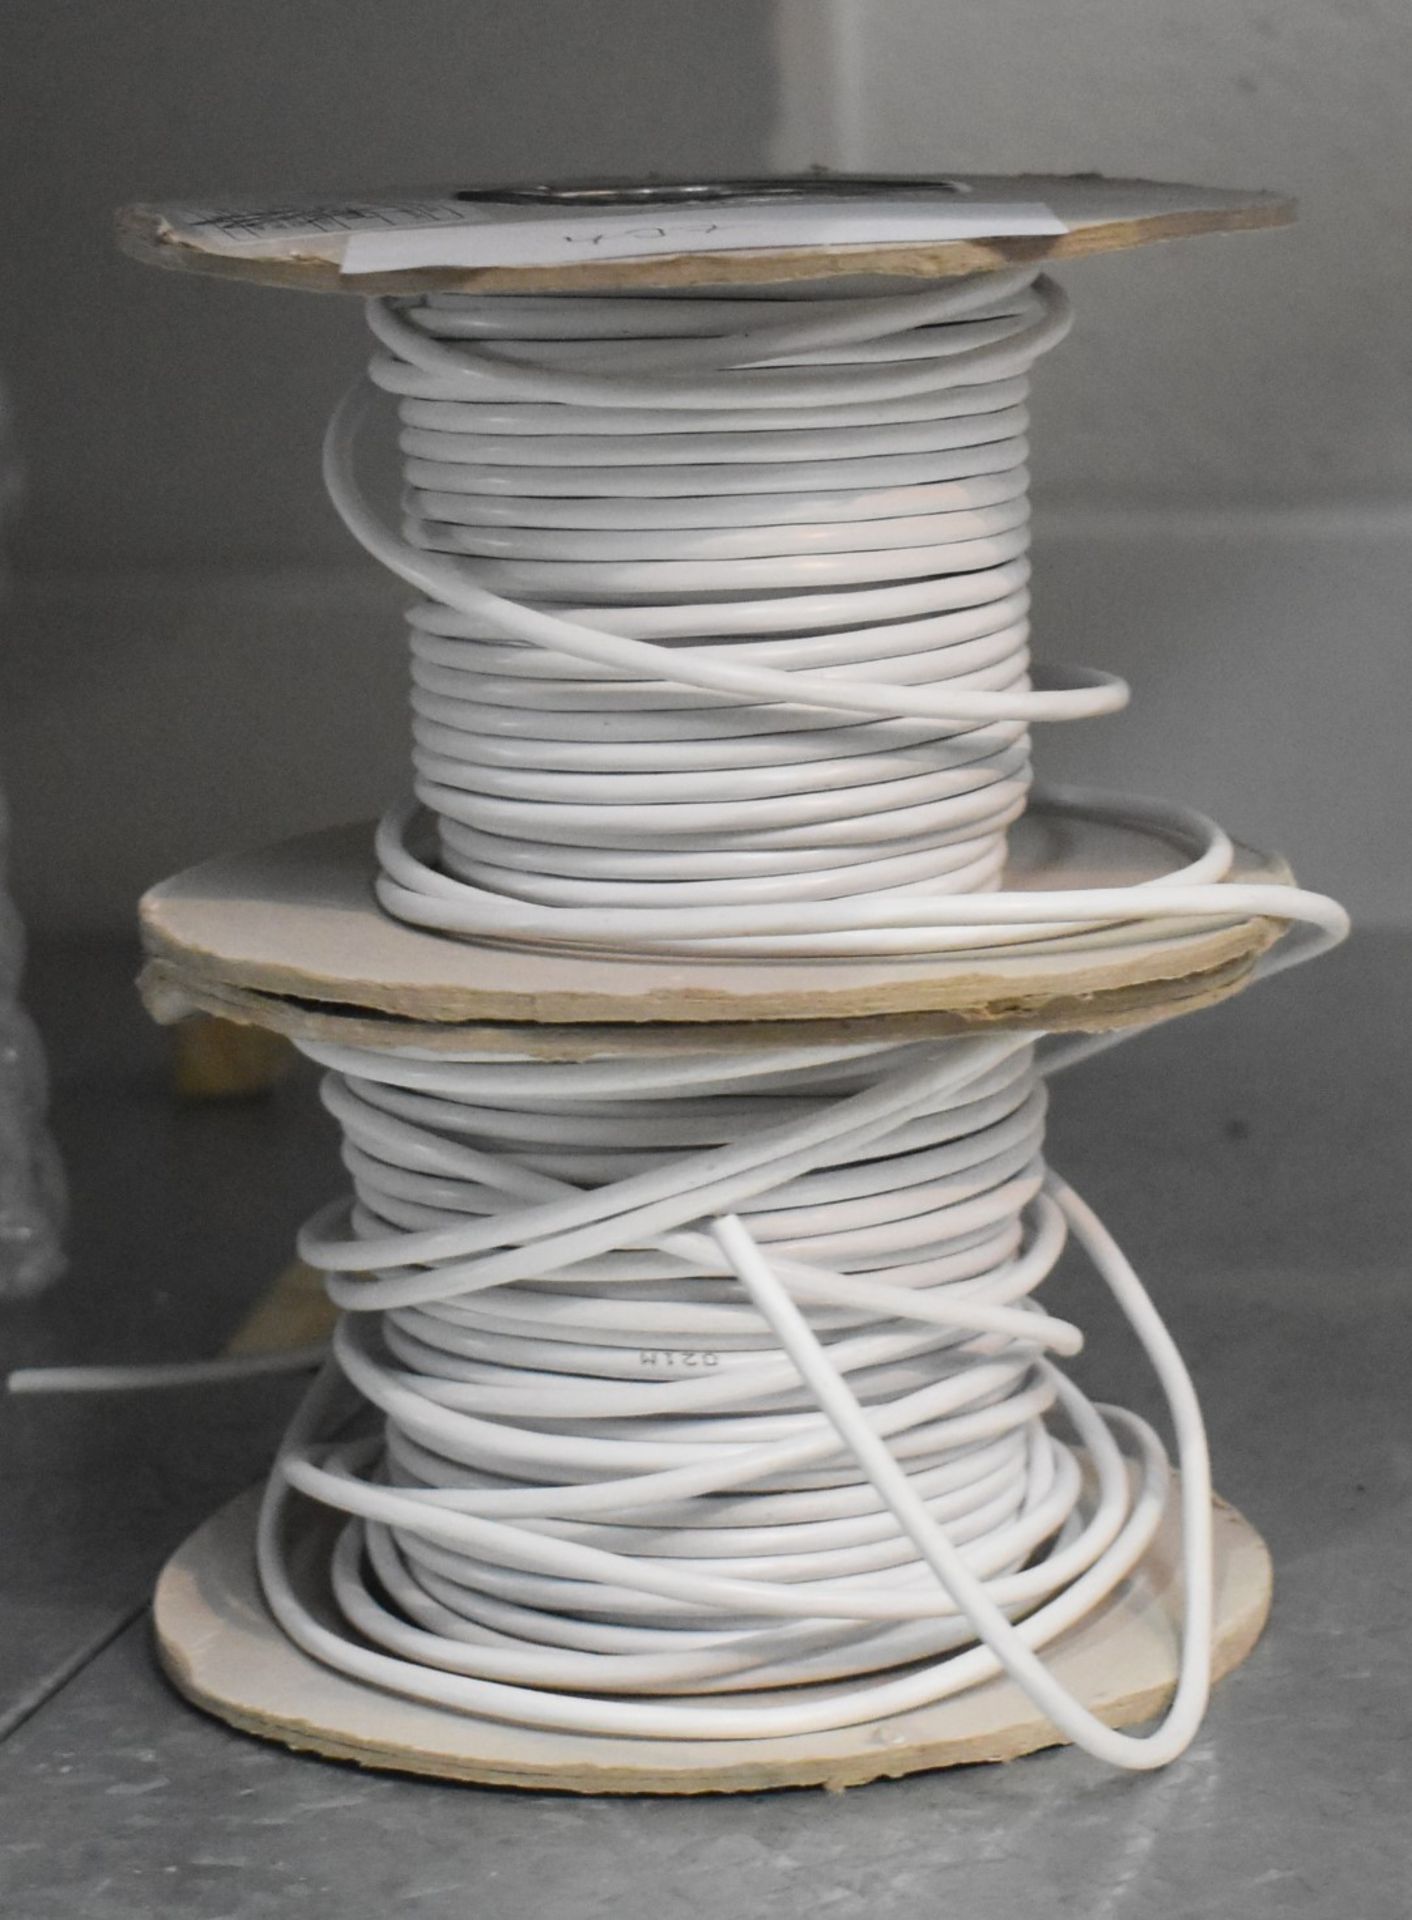 2 x Reels of Procom Type 3 Alarm Cable - PVC White - Ref 437 - CL501 - Location: Warrington WA5